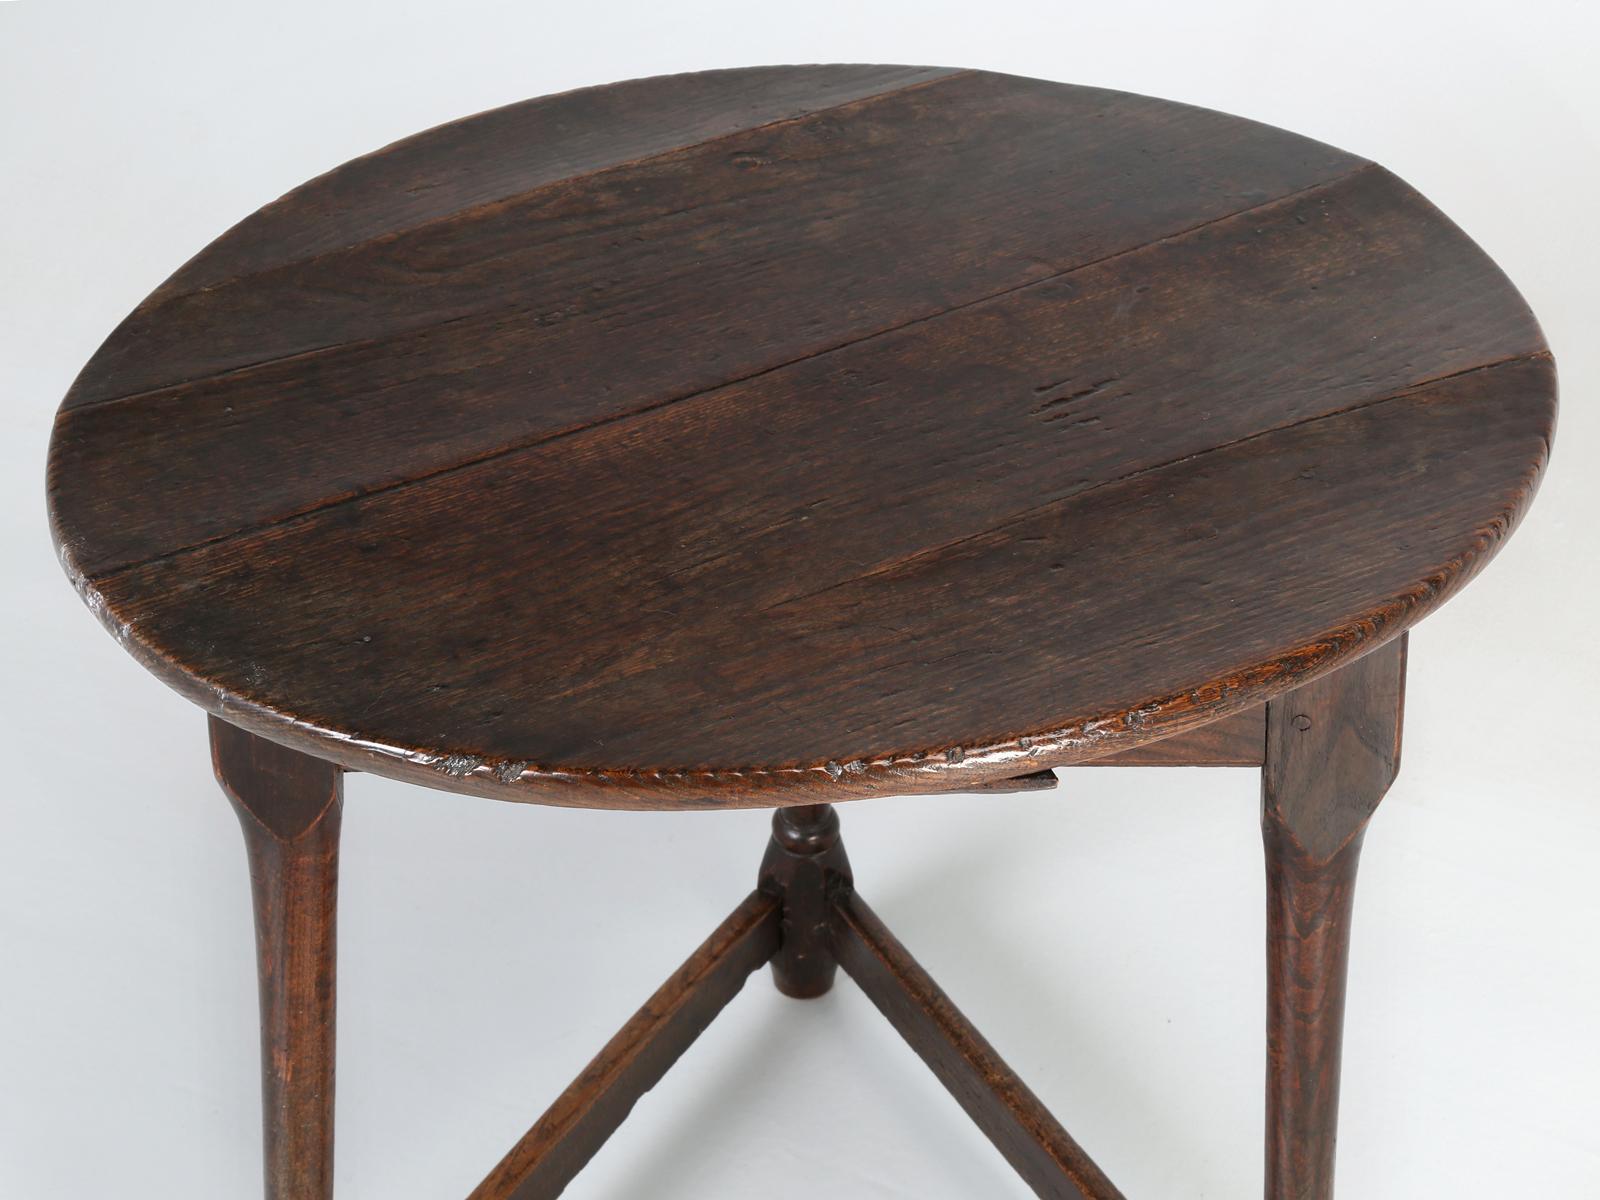 Antique English Cricket Table with a Great Original Patina, circa 1800s 2